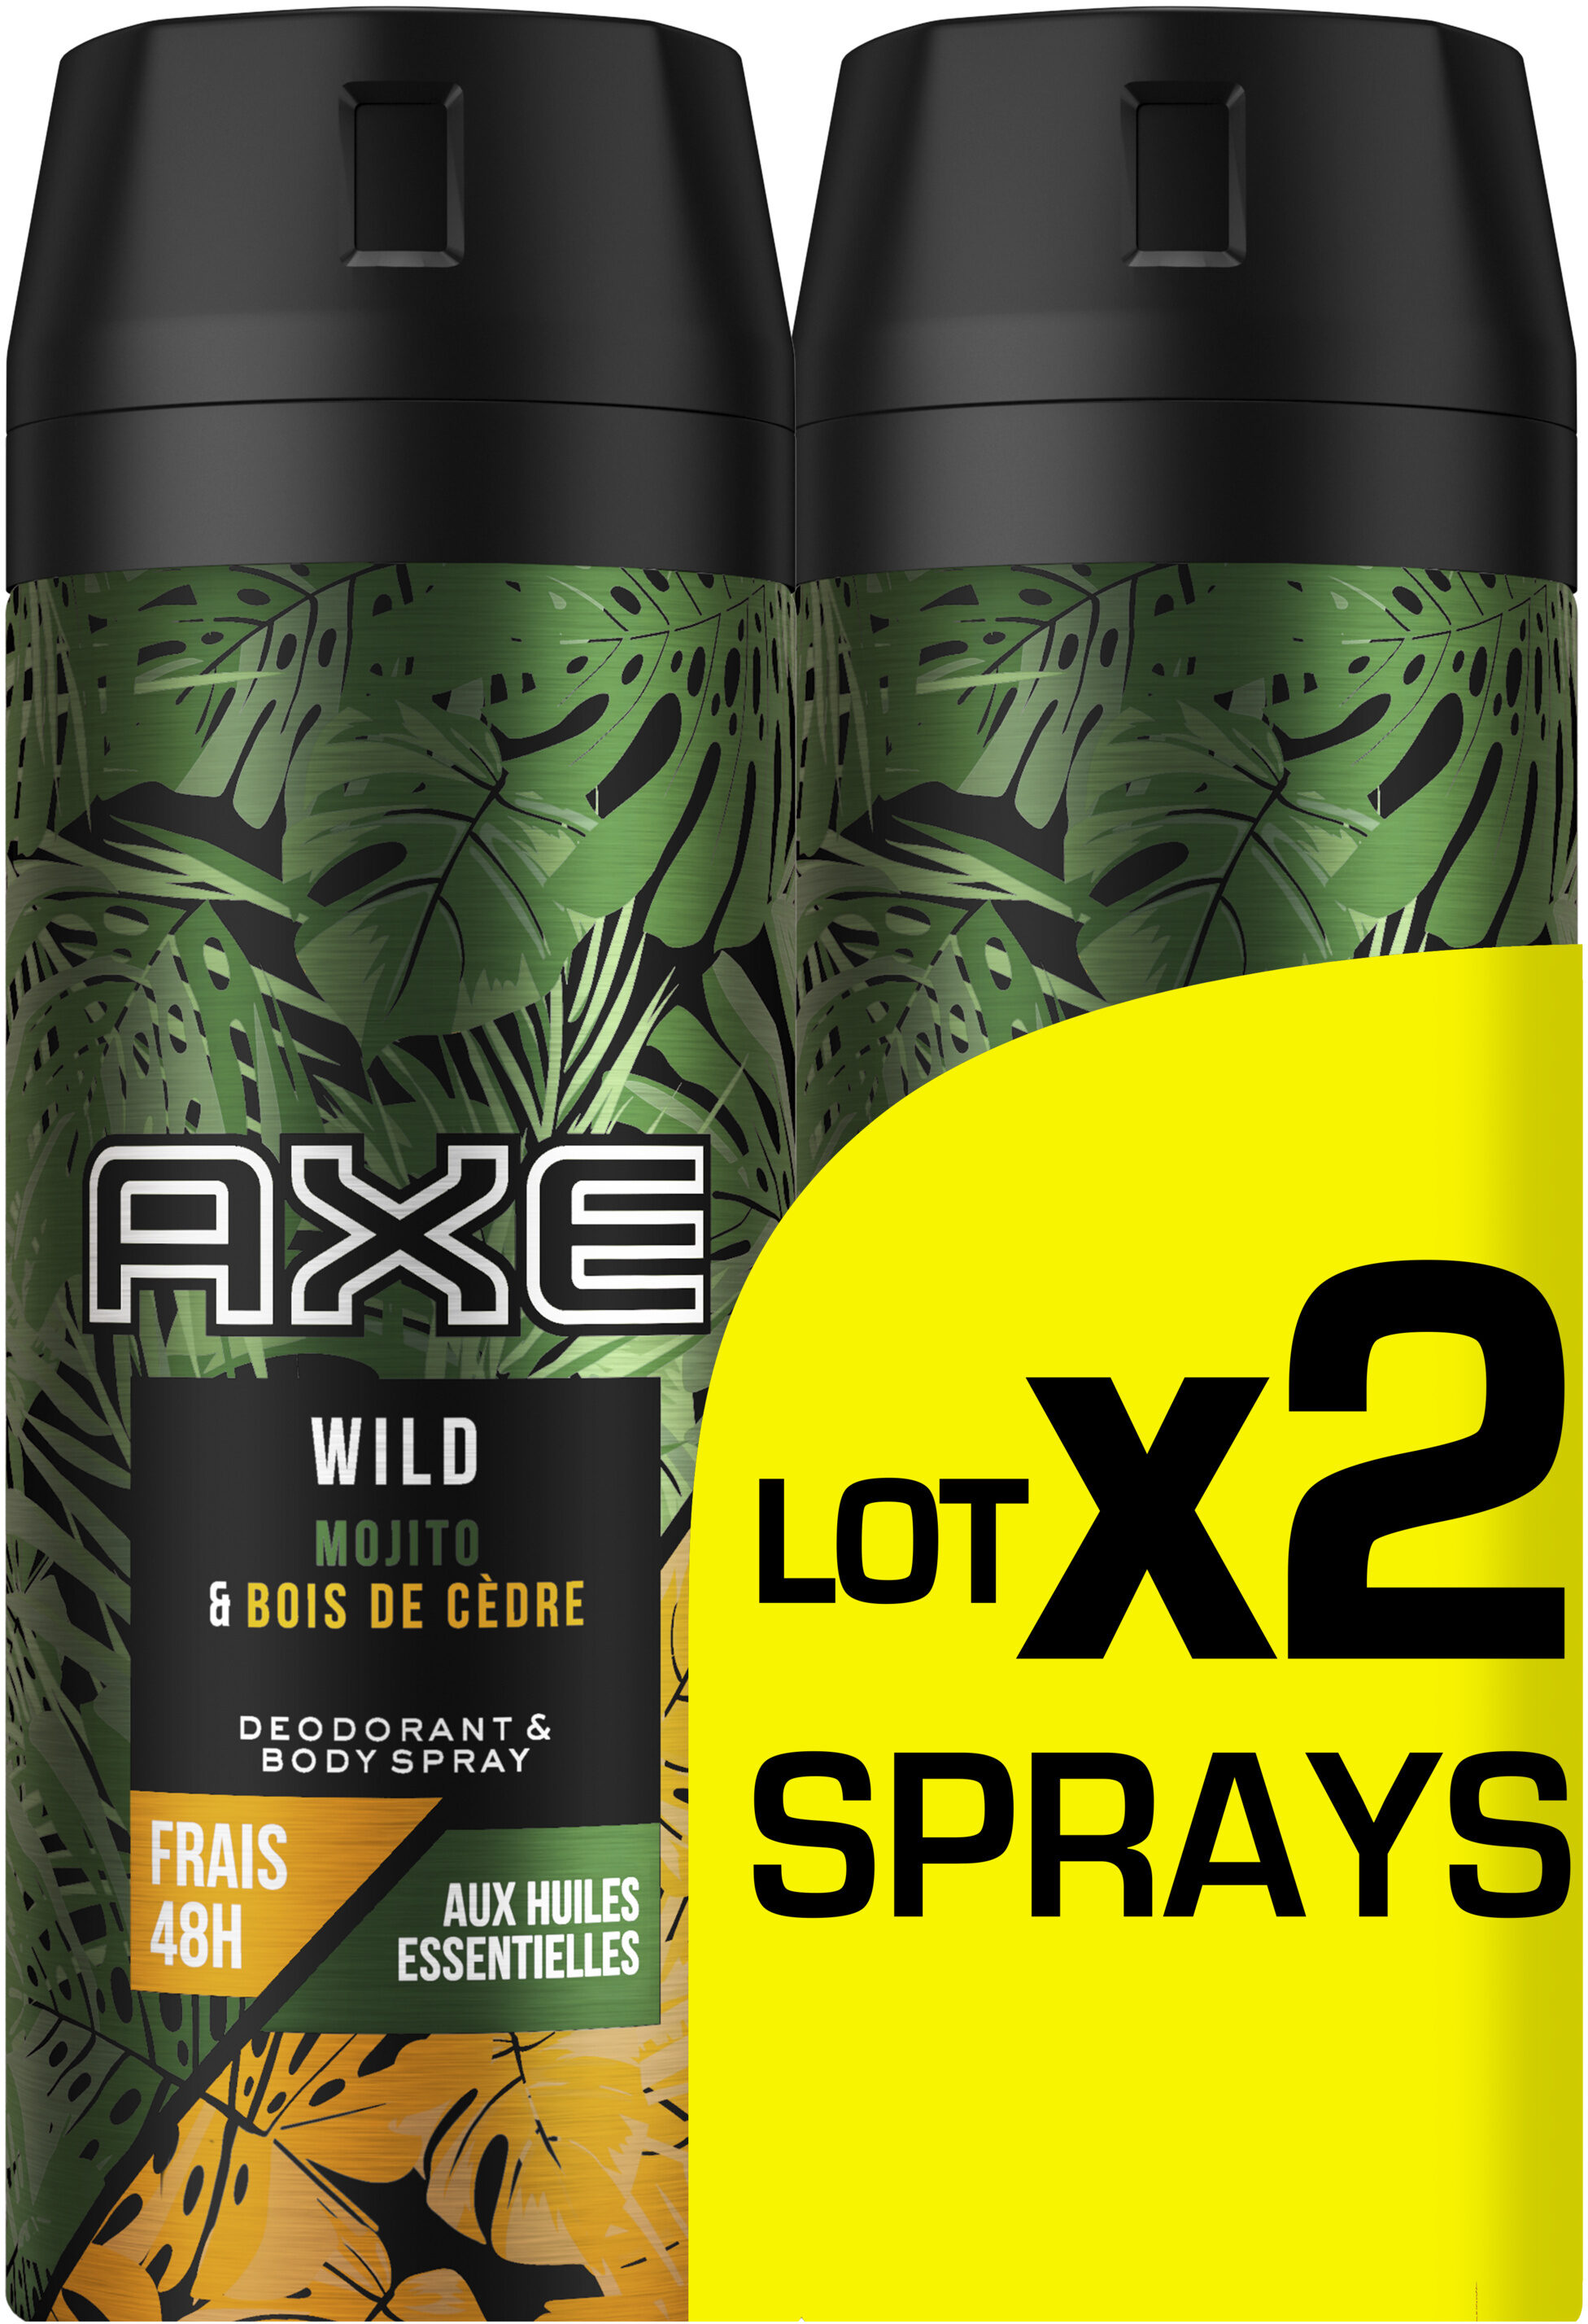 AXE Wild Déodorant Homme Spray Mojito & Bois de Cedre Lot 2 x 150ml - Product - fr